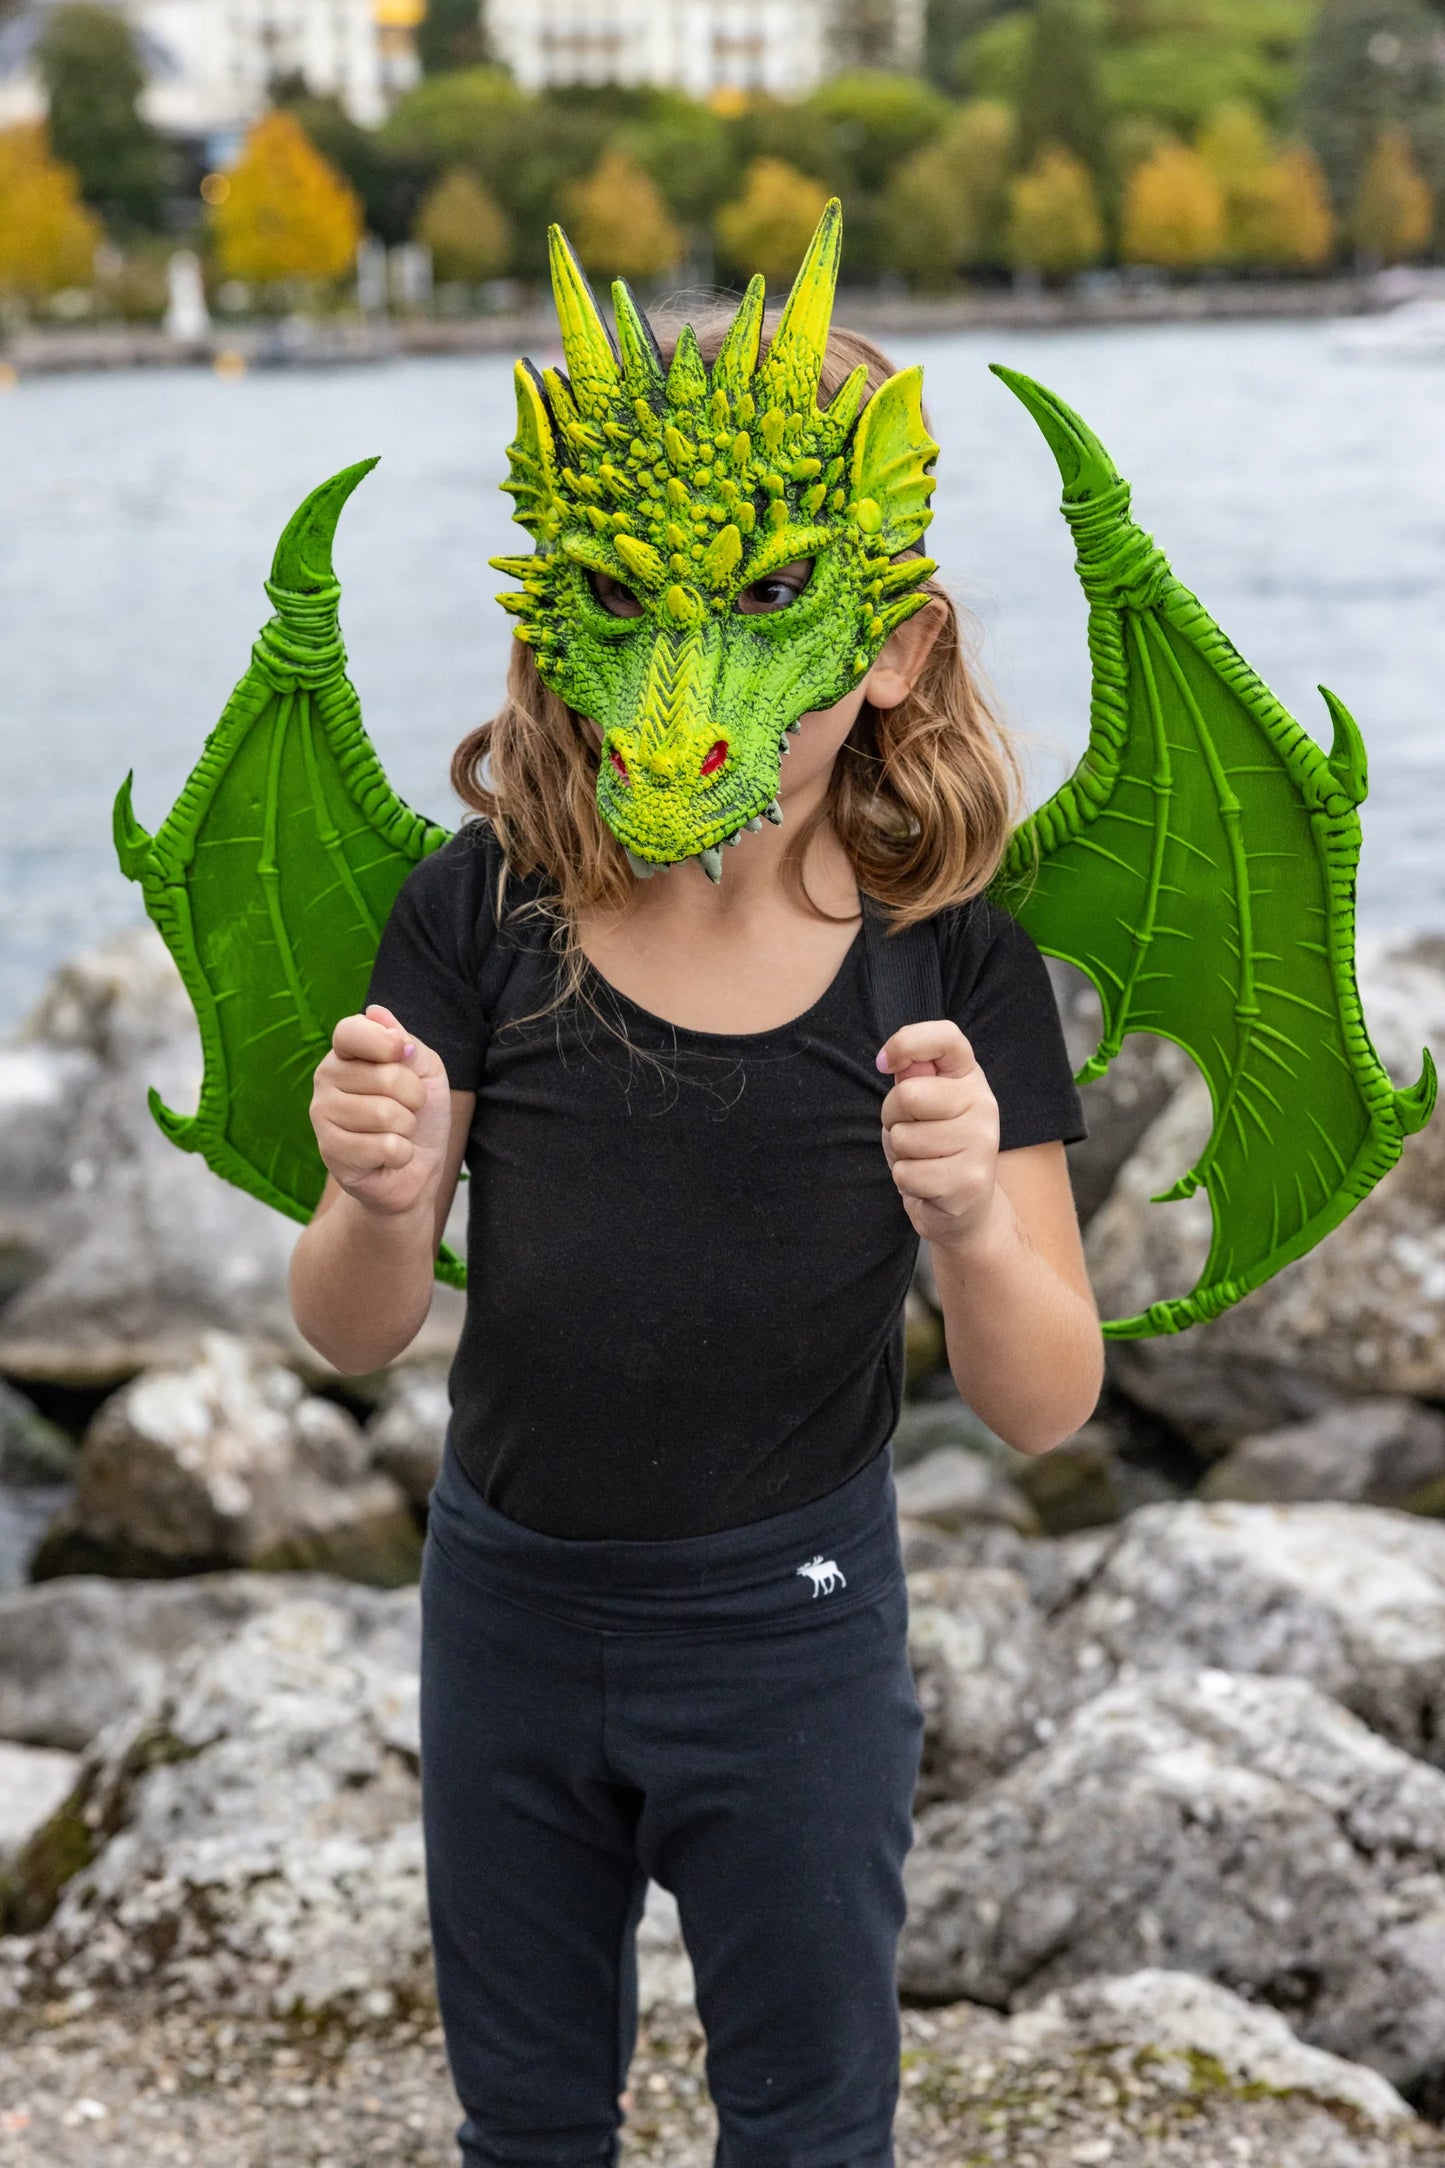 Dress Up - Dragon Wings (Green)